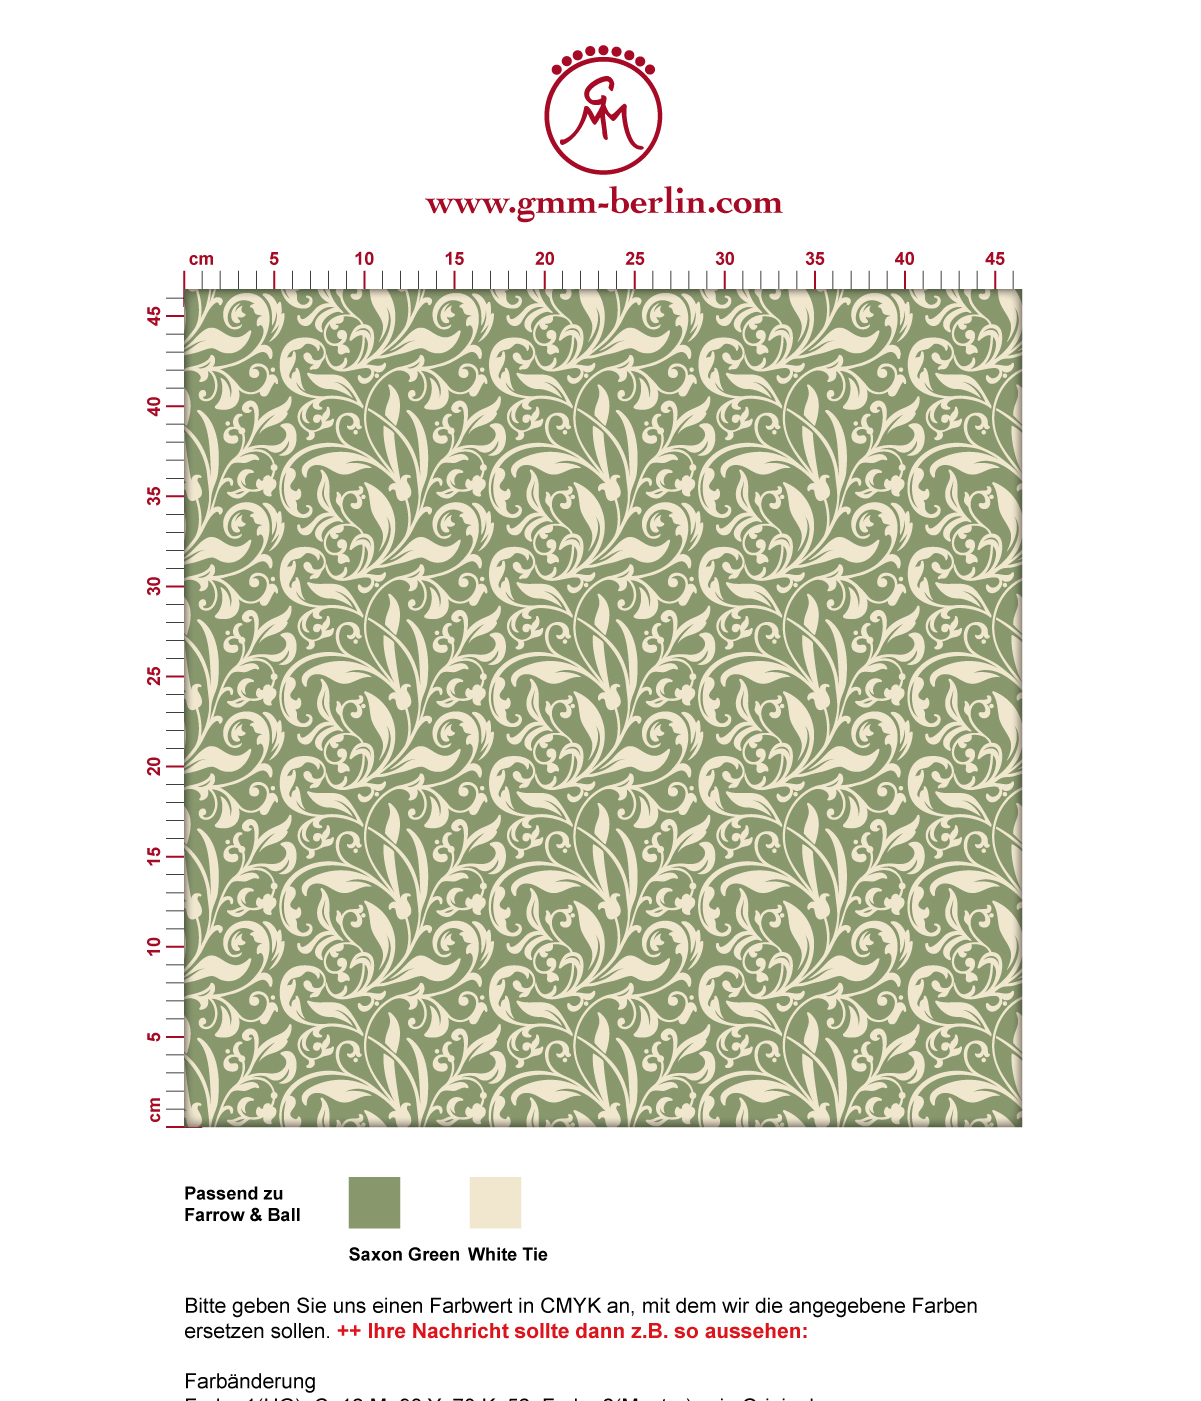 "Victorian Delight" - edle Tapete mit victorianischem Blatt Muster grün angepasst an Farrow and Ball Wandfarben. Aus dem GMM-BERLIN.com Sortiment: Schöne Tapeten in der Farbe: grün